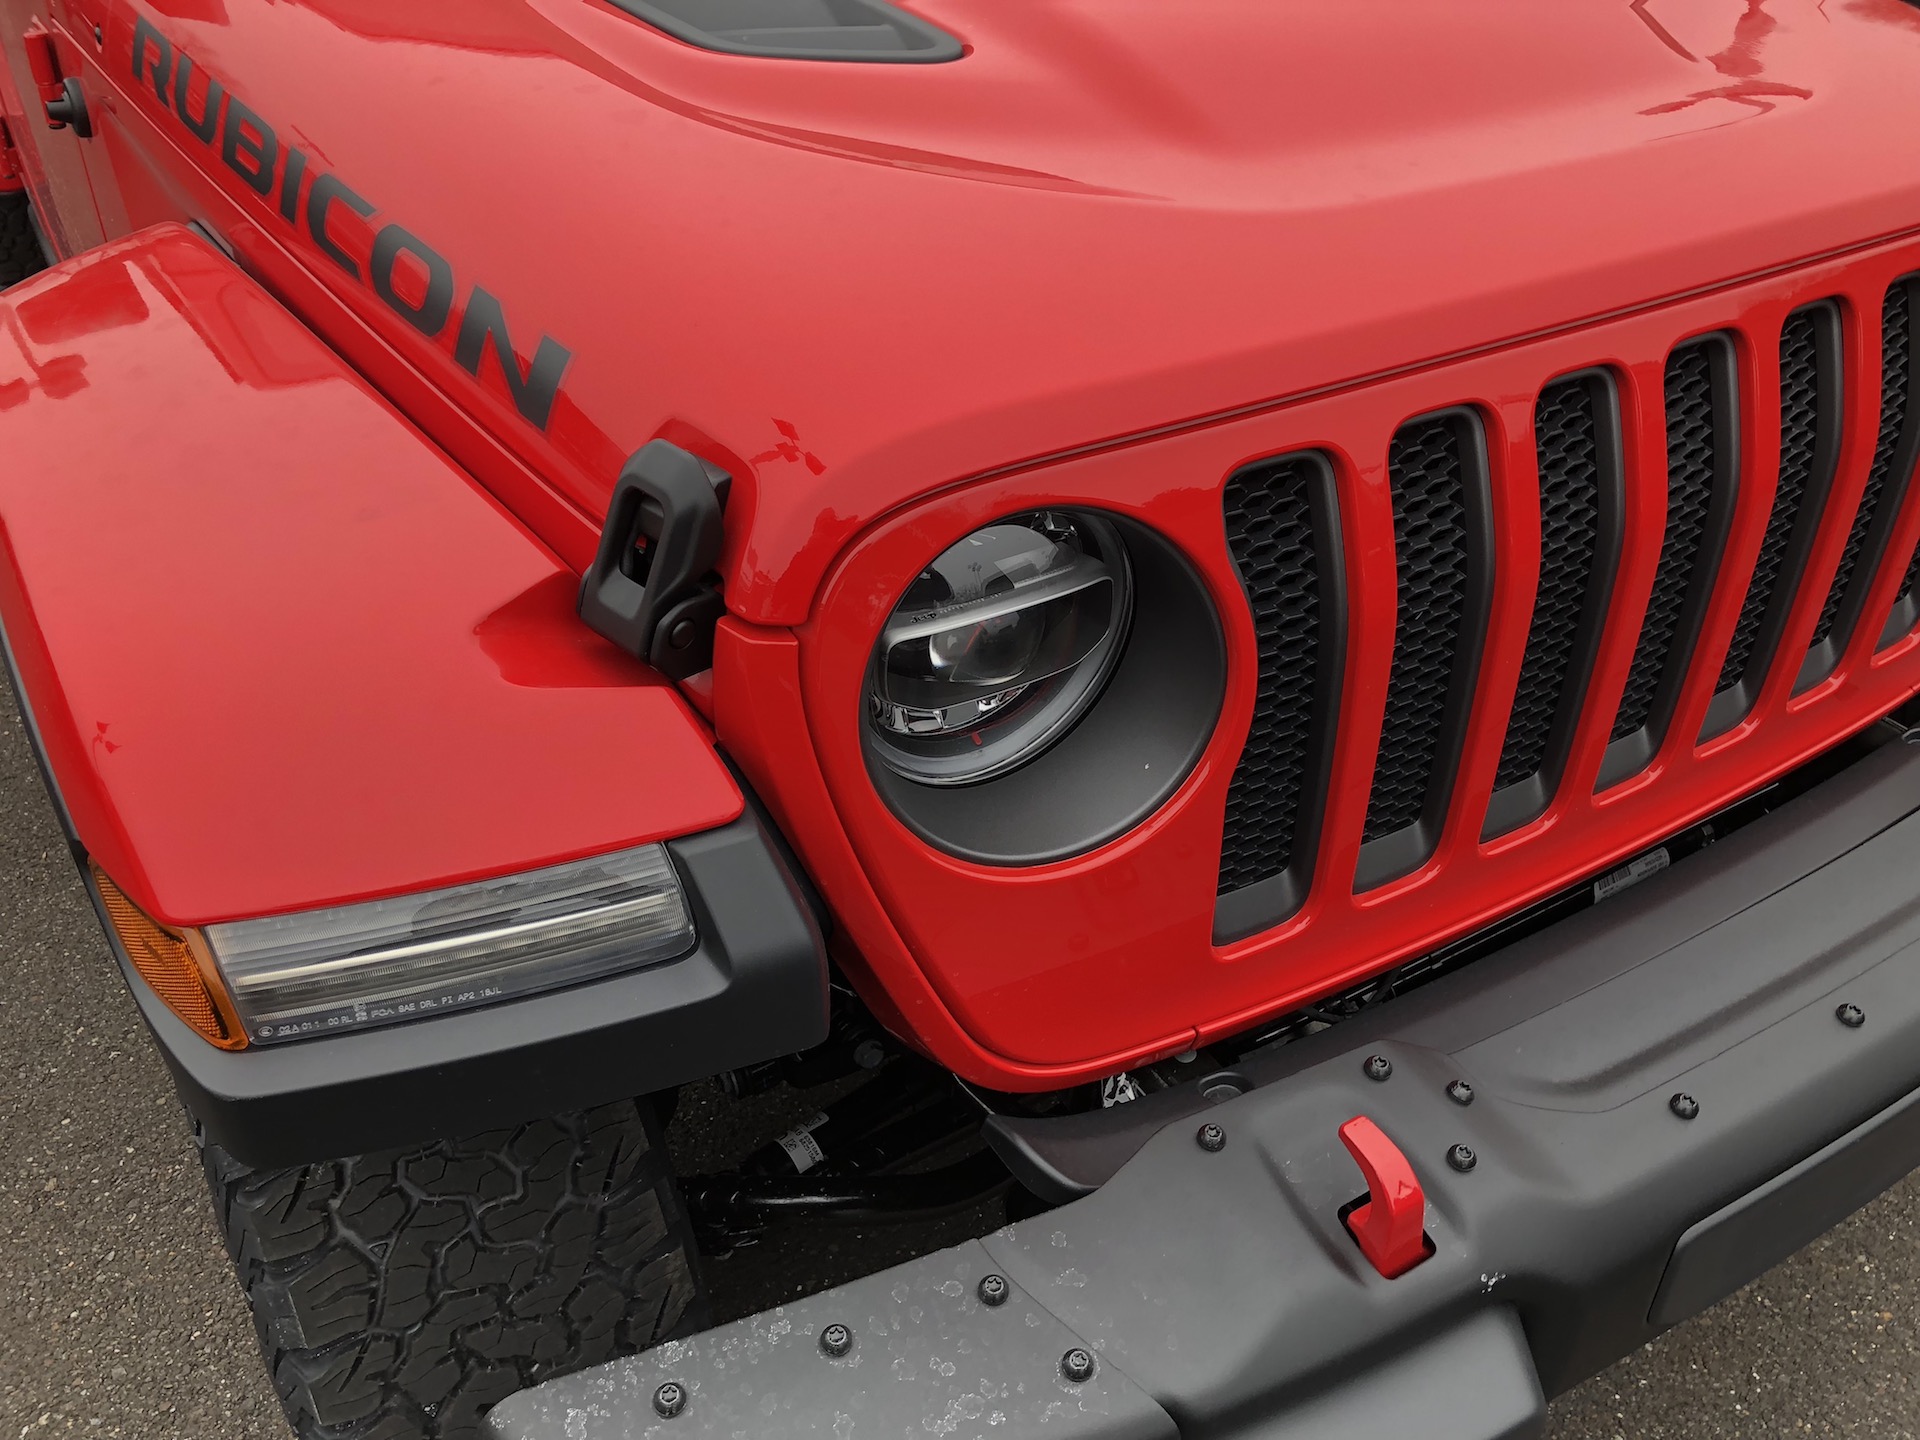 Jeep Wrangler Rubicon: What Sets It Apart?